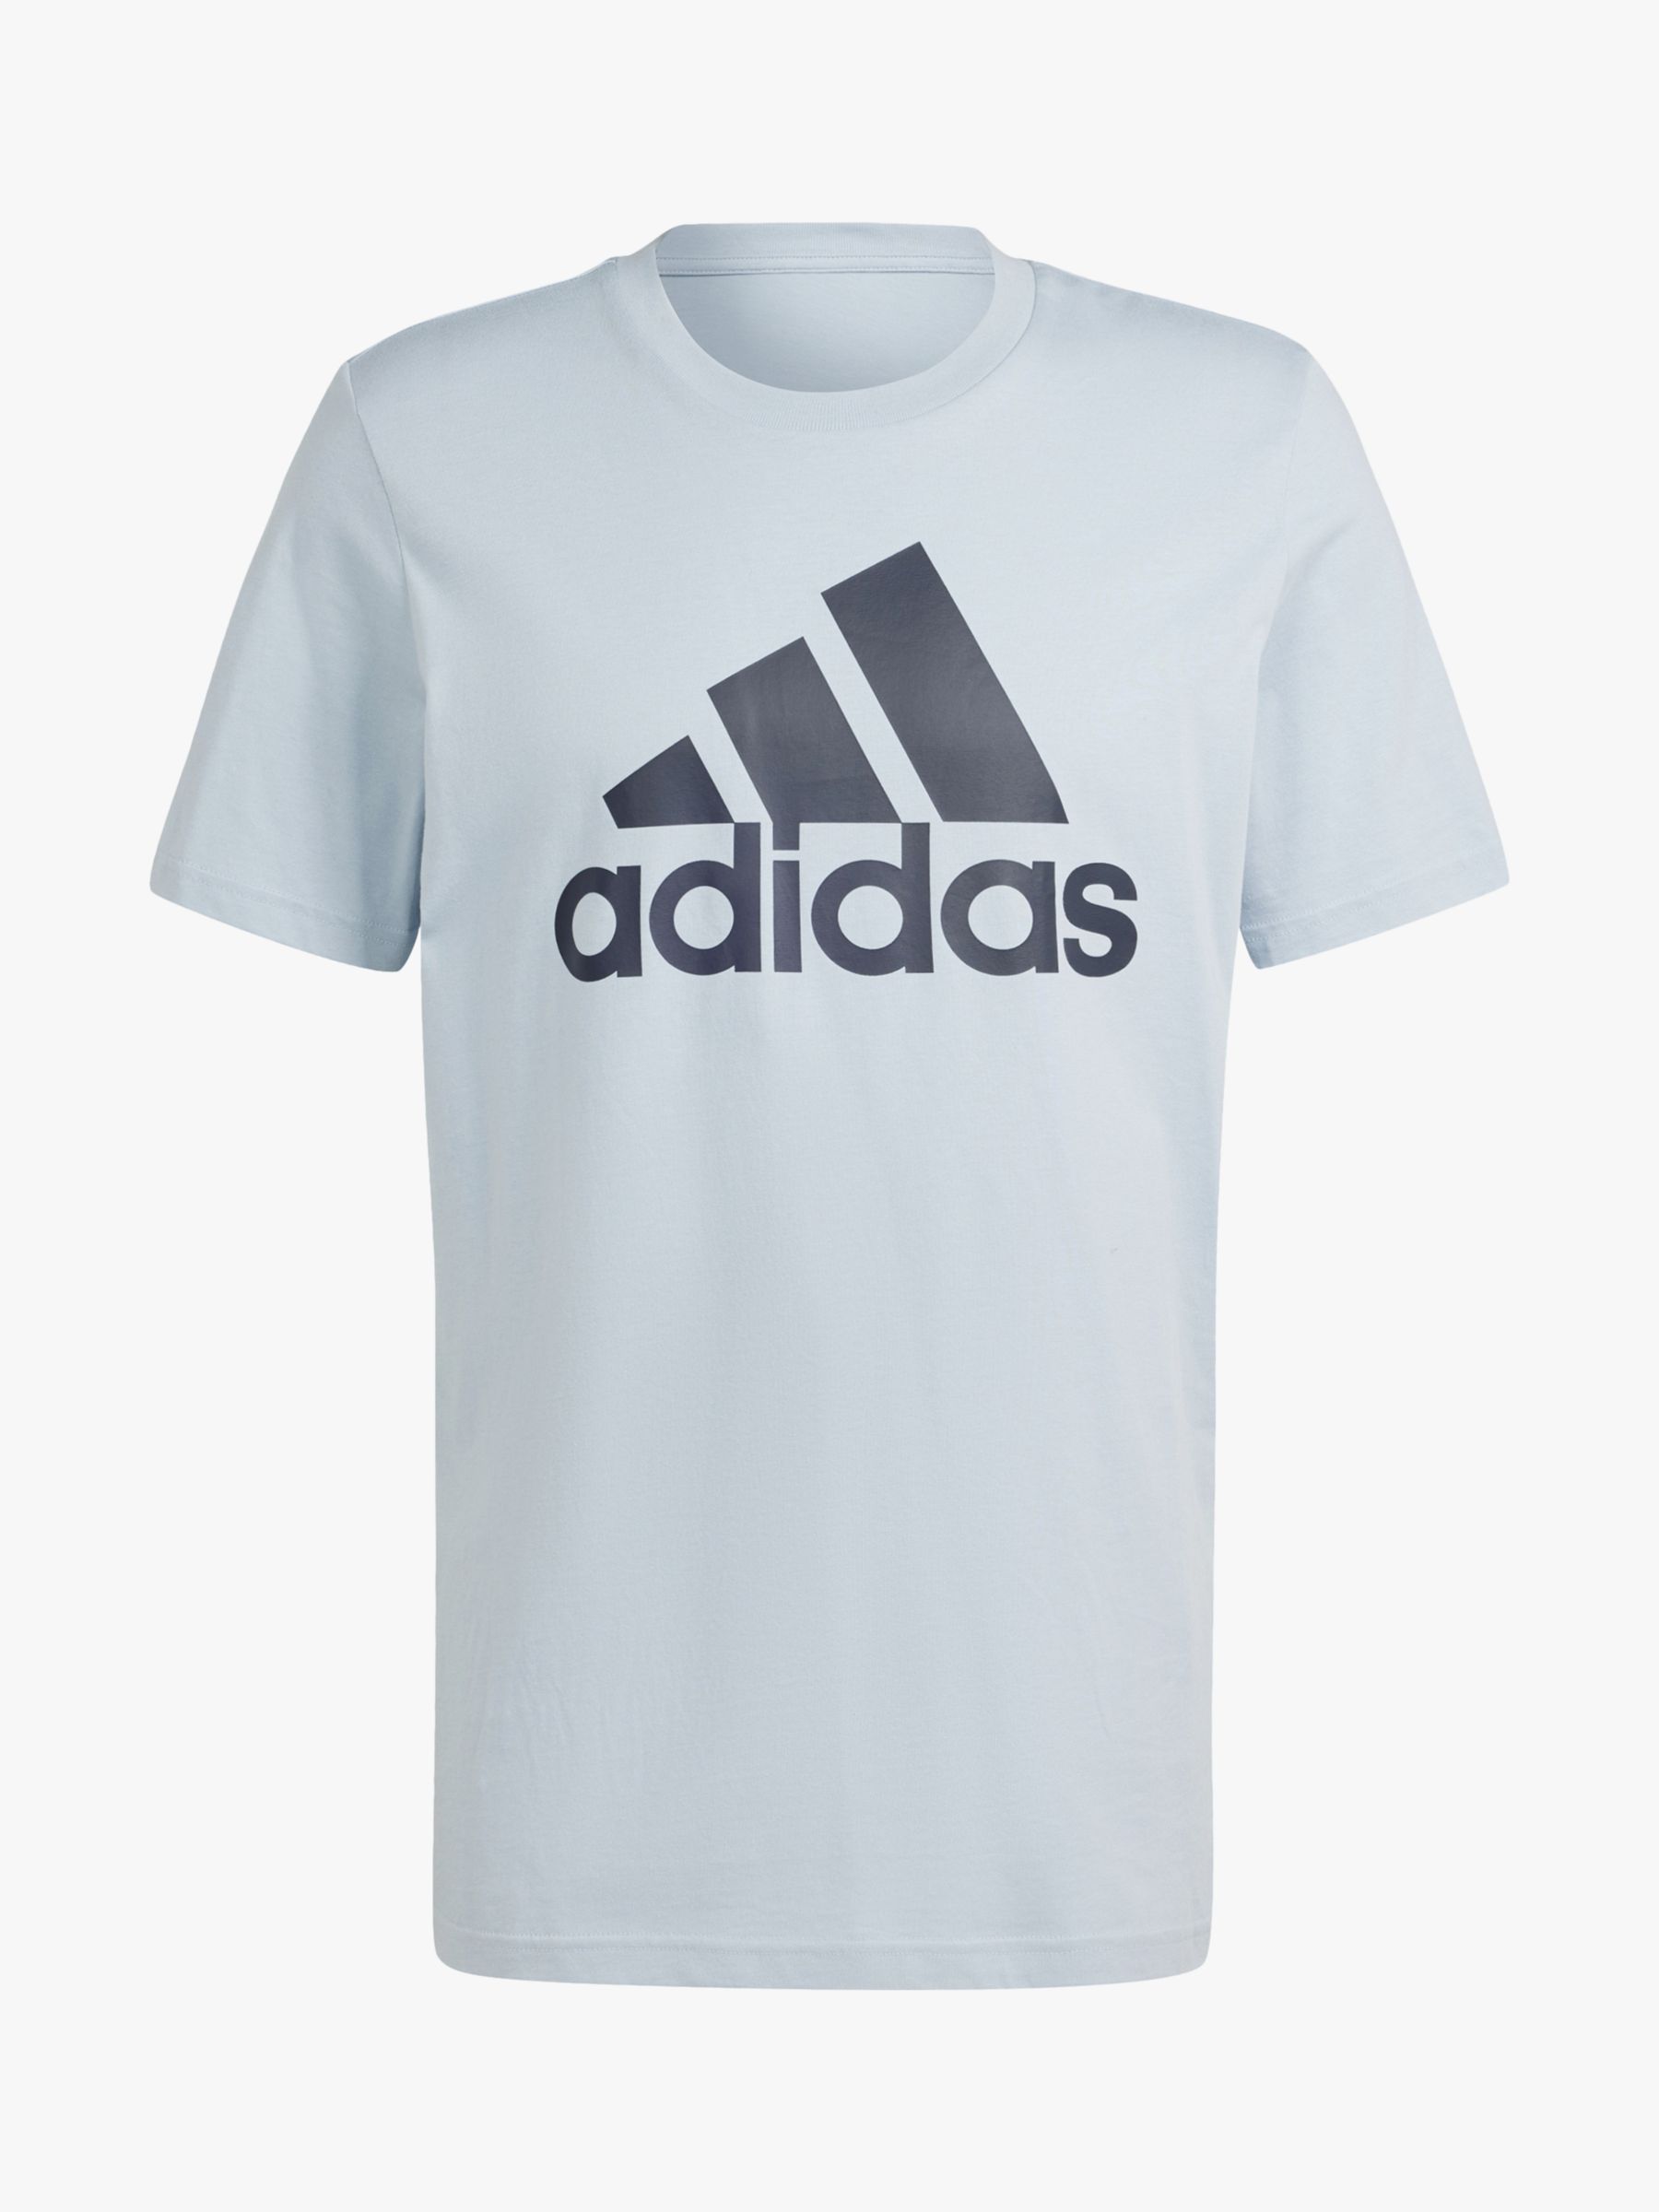 adidas Essentials Single Jersey Logo T-Shirt, Blue, S